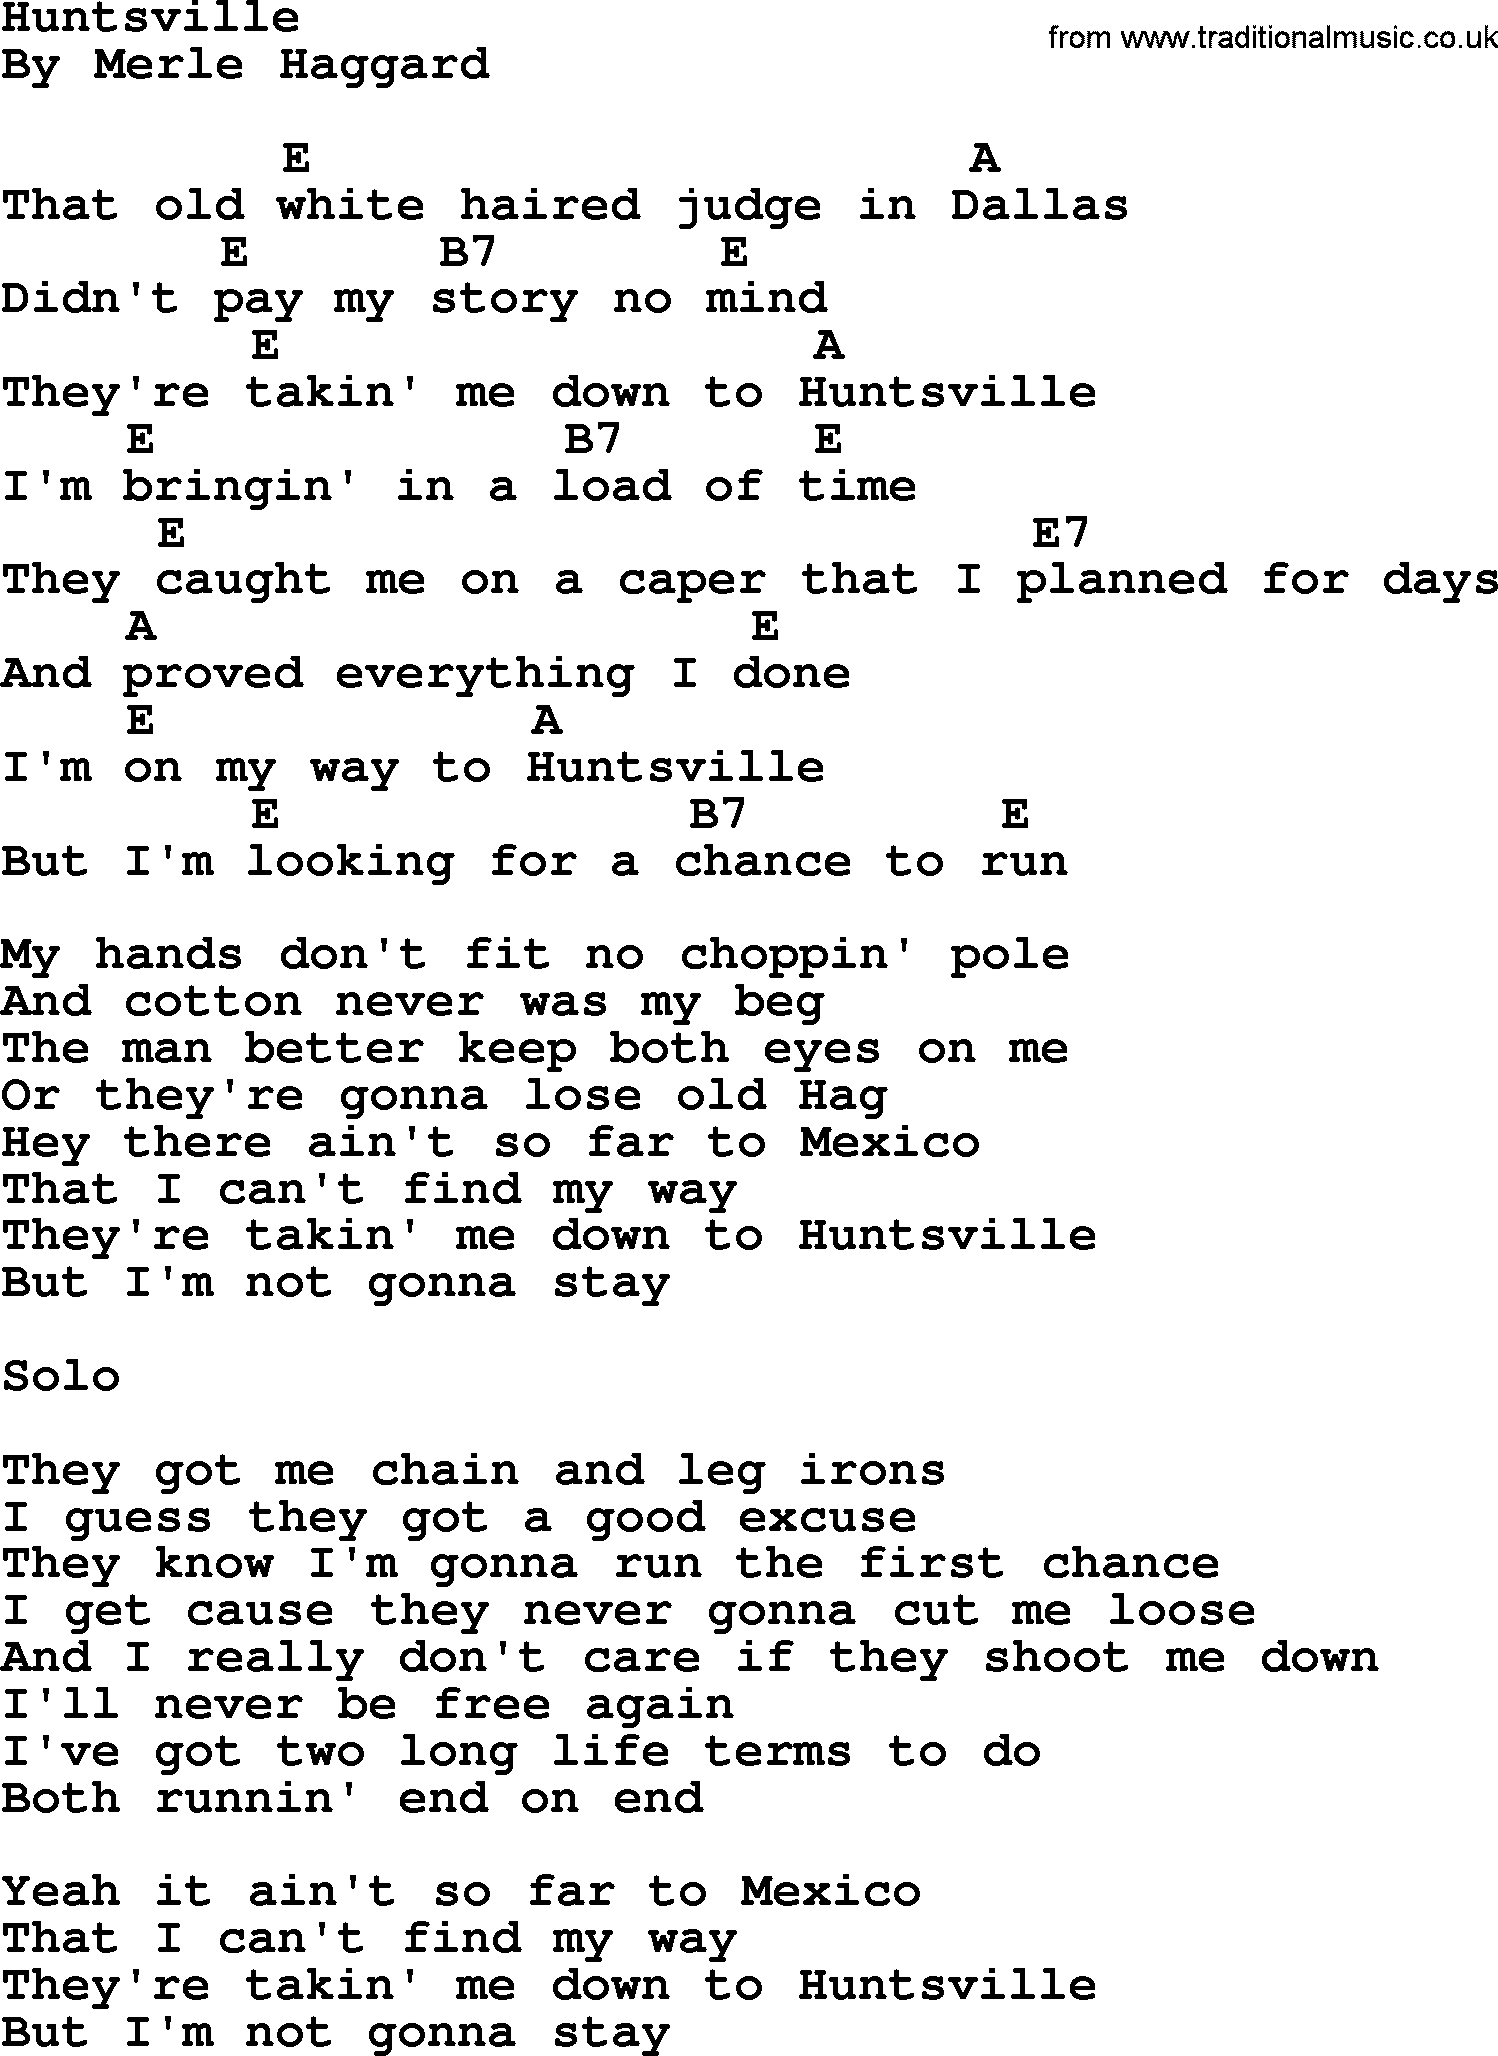 Merle Haggard song: Huntsville, lyrics and chords